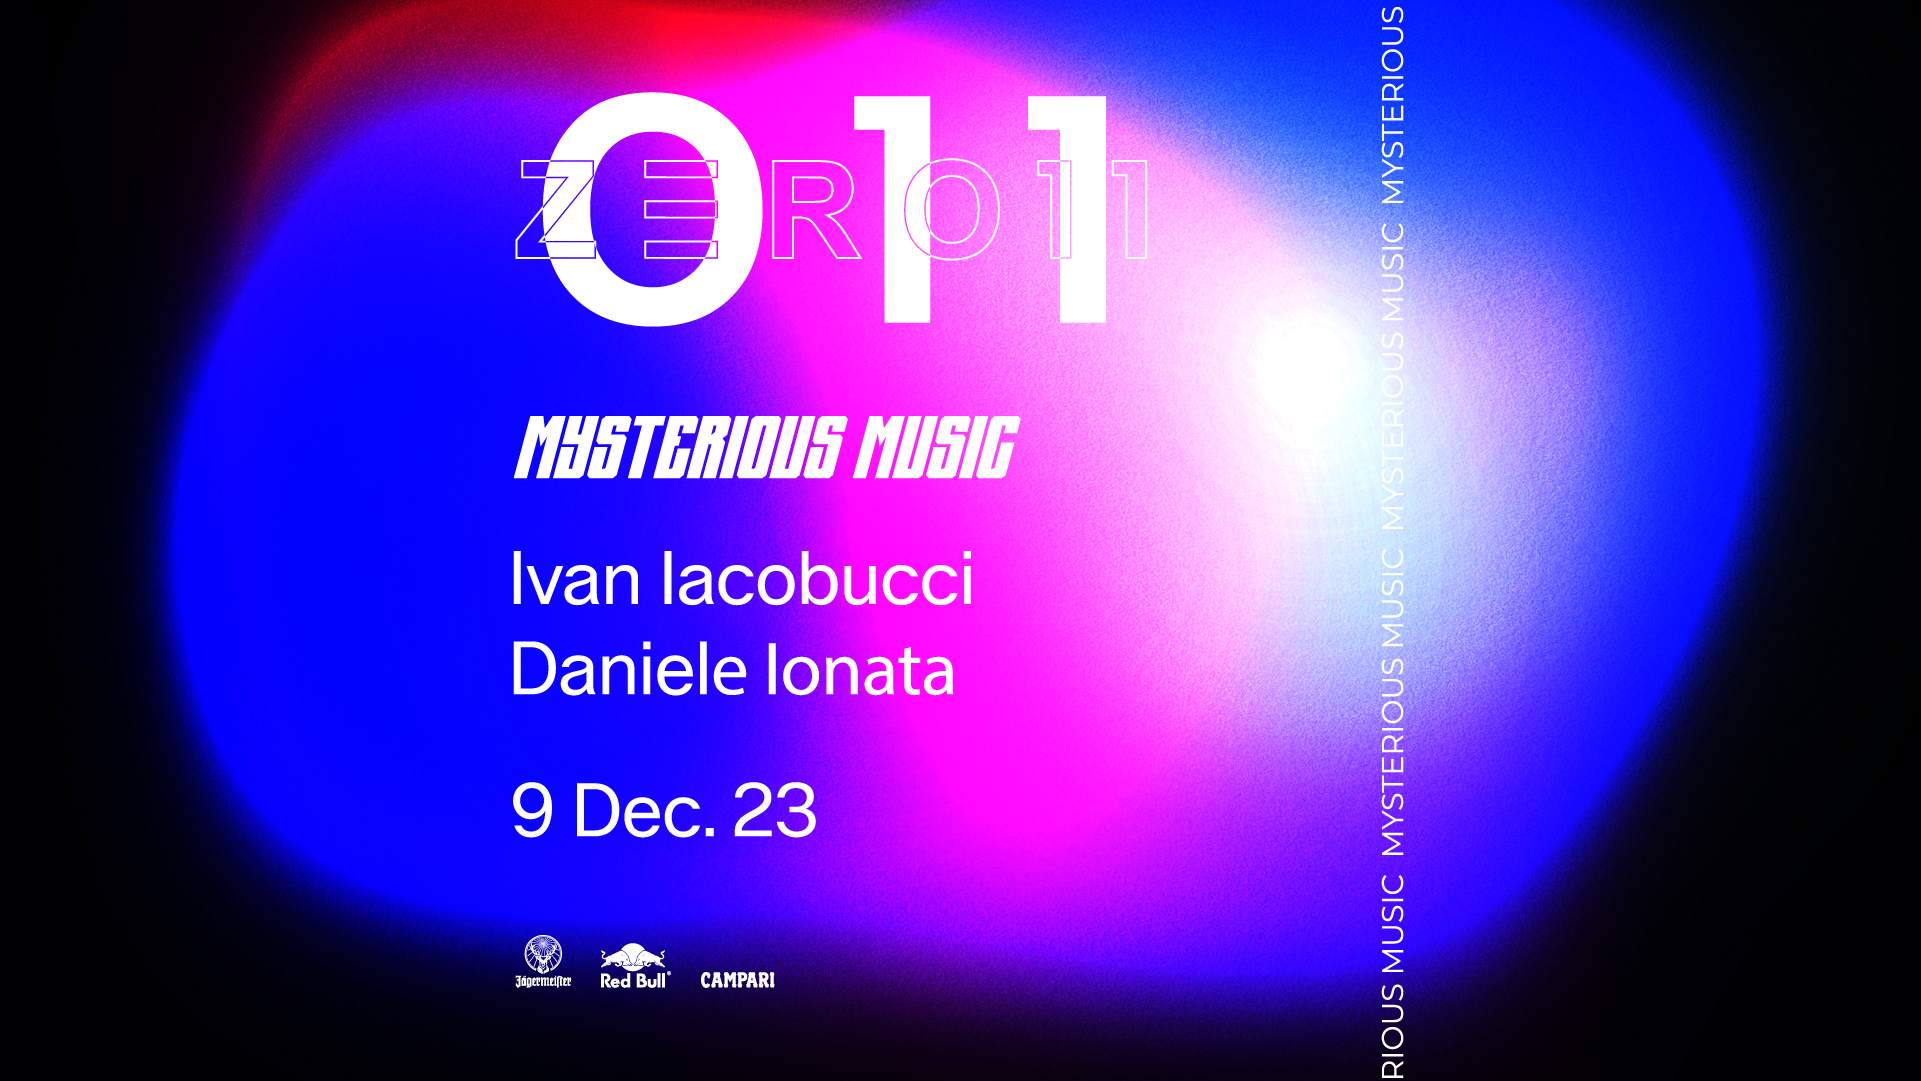 Club Zero11 pres. Mysterious Music with Ivan Iacobucci, Daniele Ionata - フライヤー表